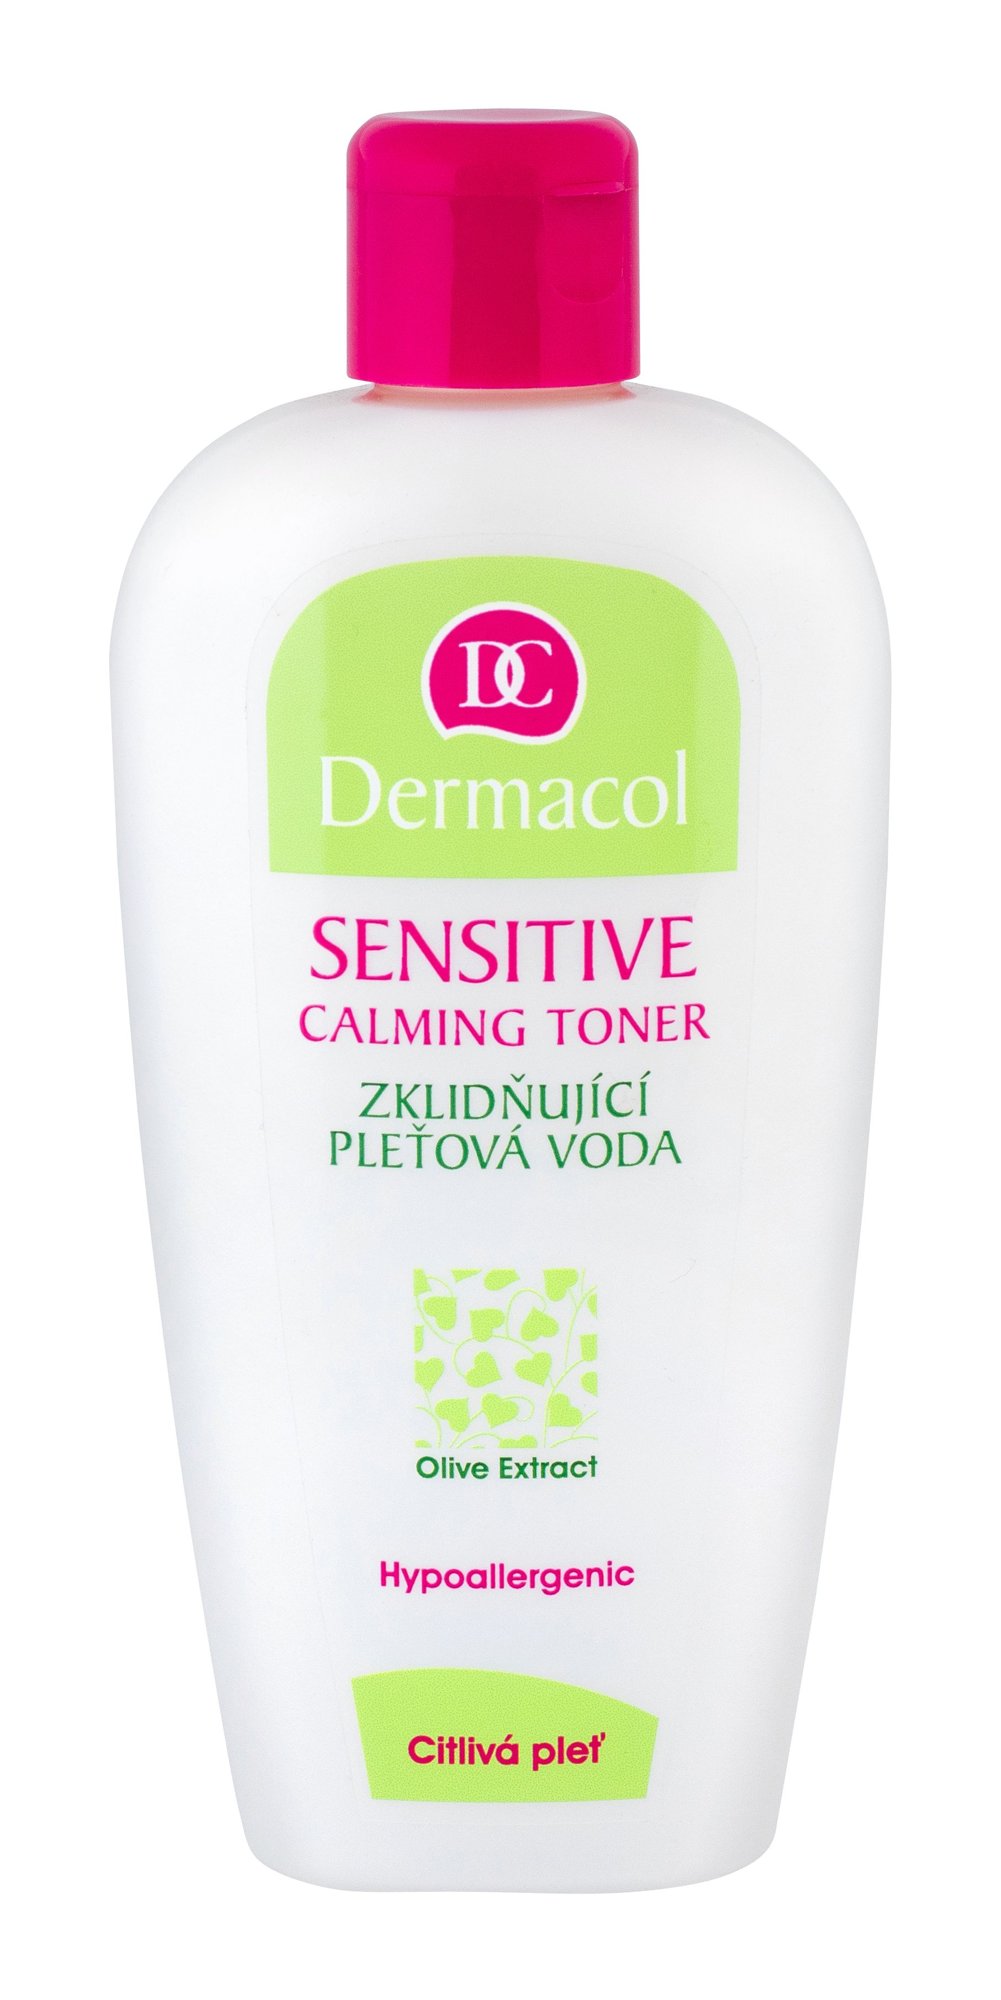 Dermacol Sensitive 200ml valomasis vanduo veidui